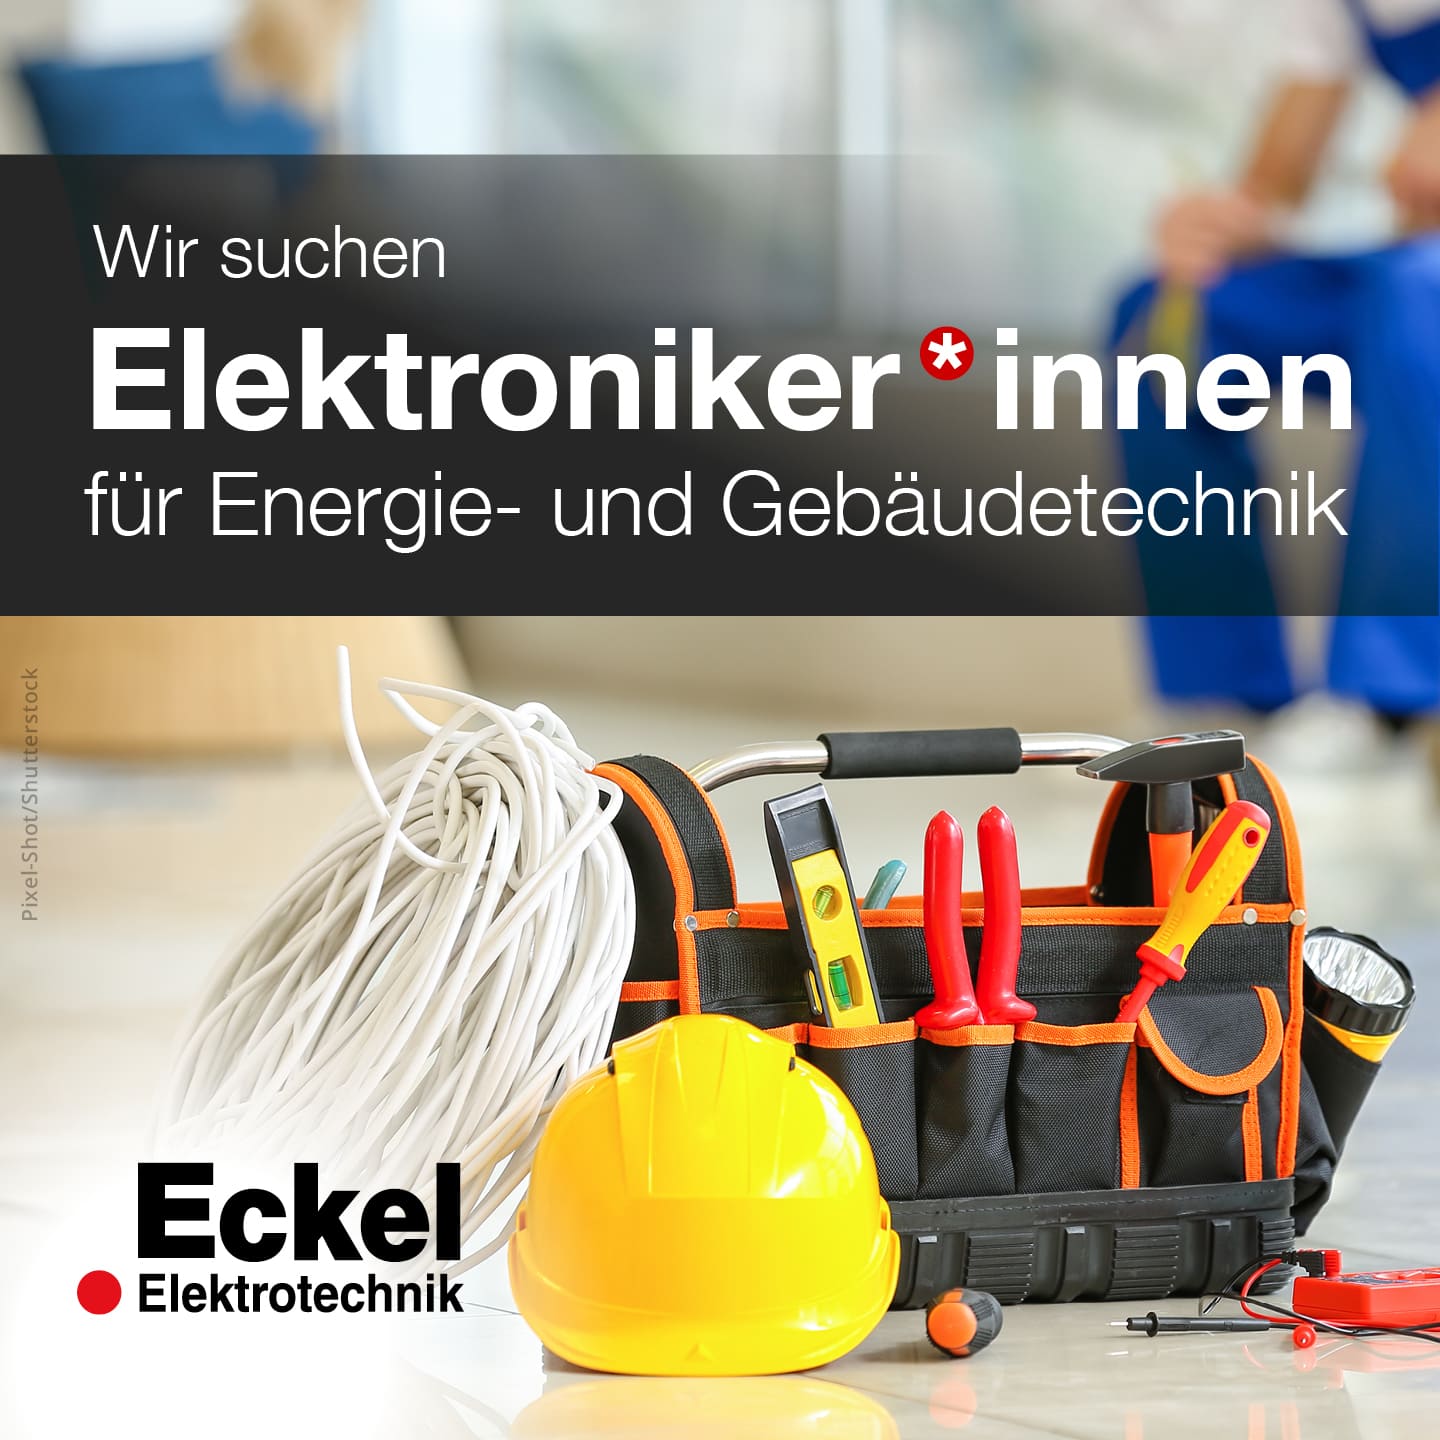 Eckel Job Anzeige Elektroniker